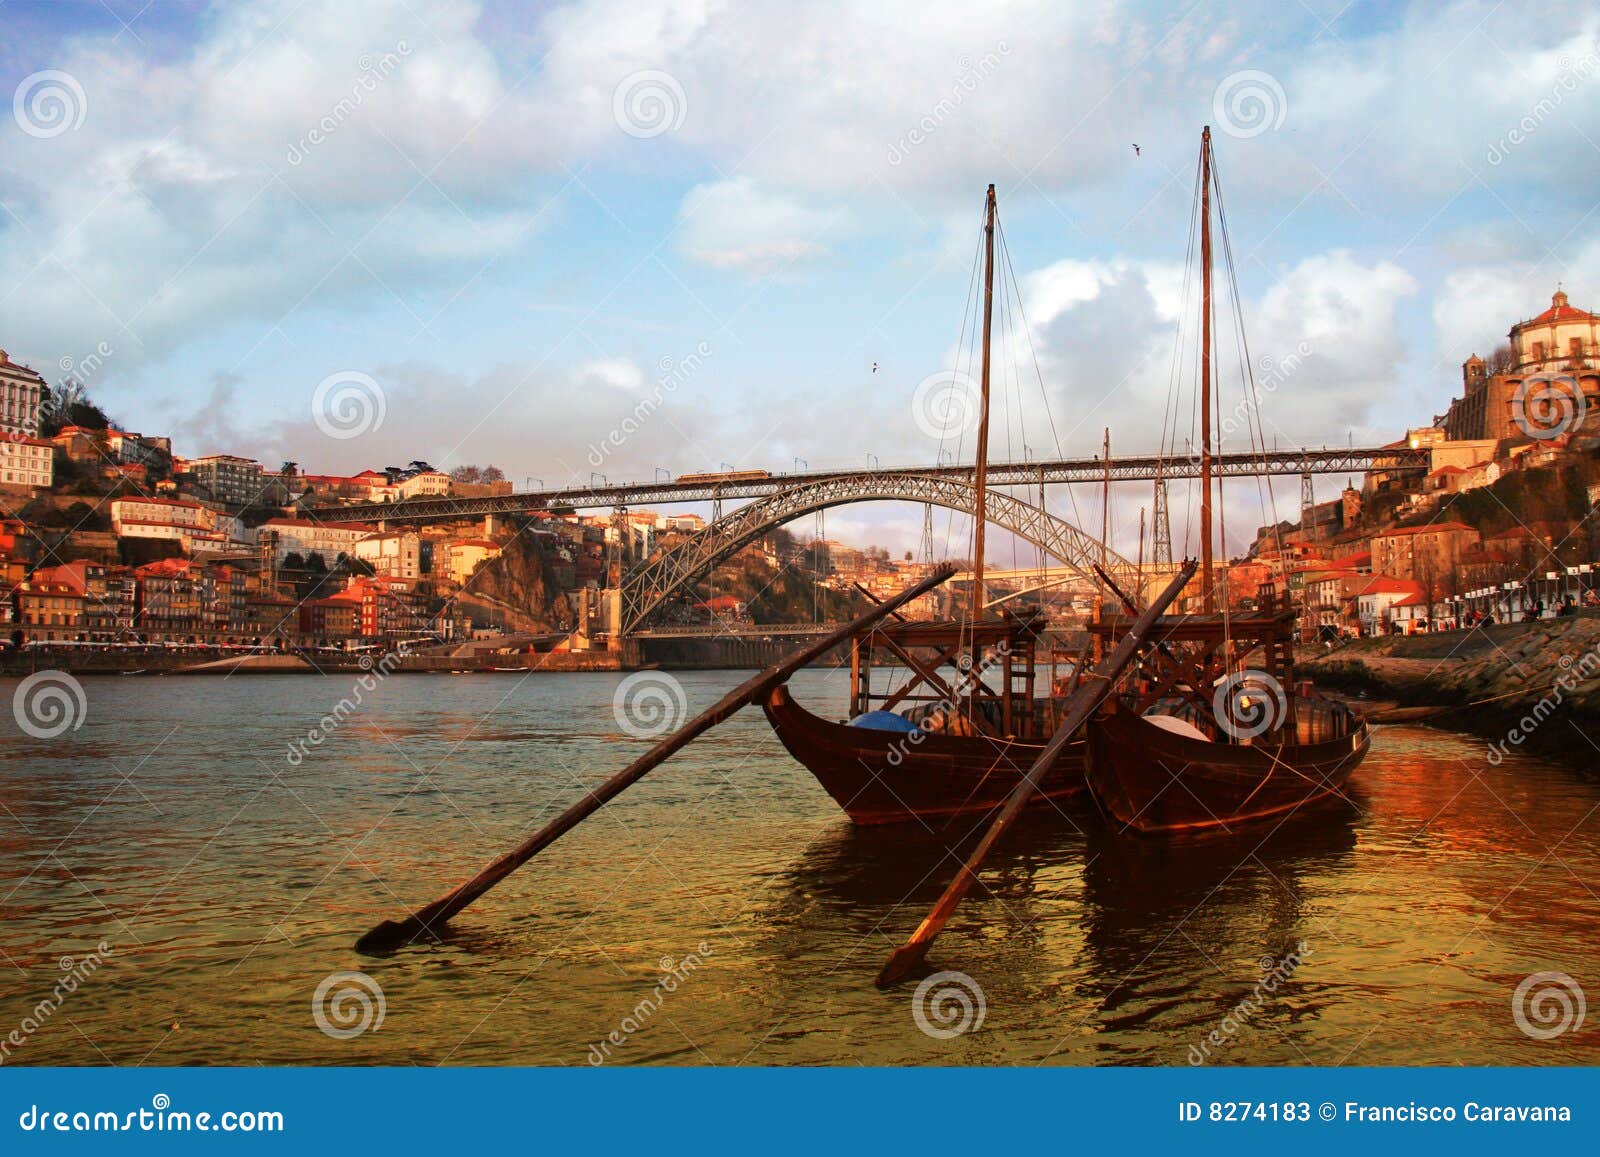 porto city - portugal